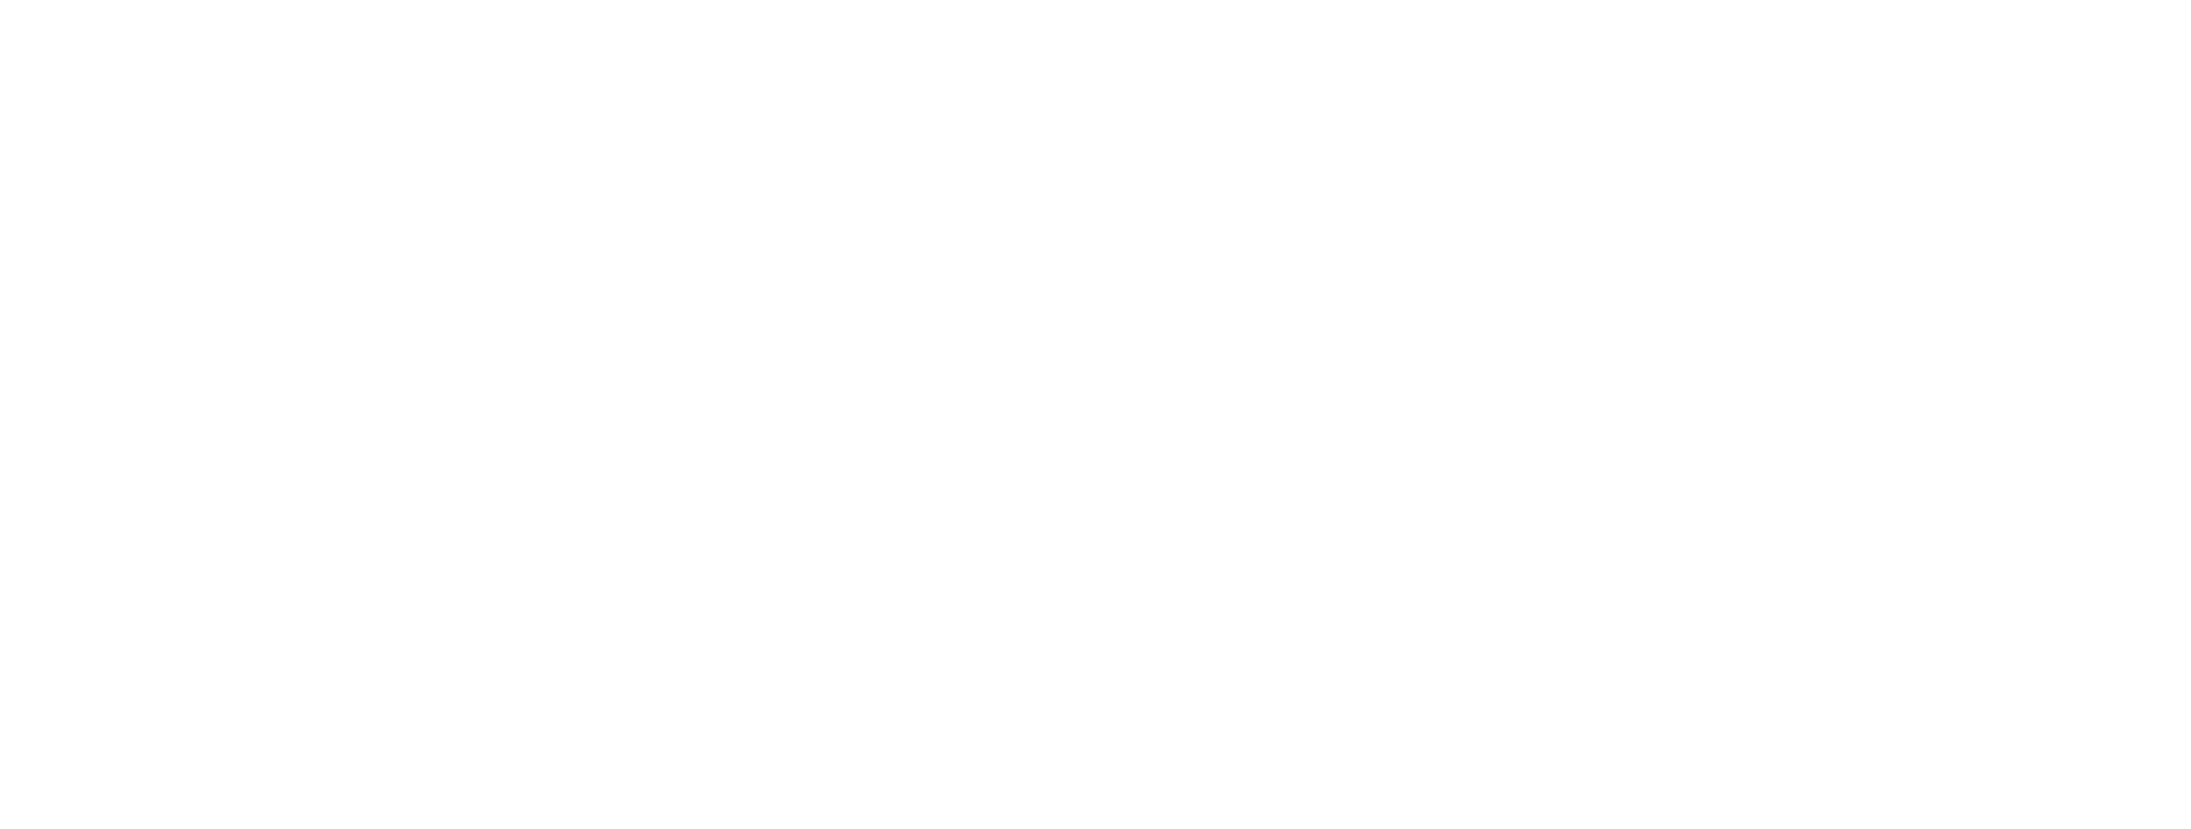 Gregory Logo - ACADÉMIE GREGORY